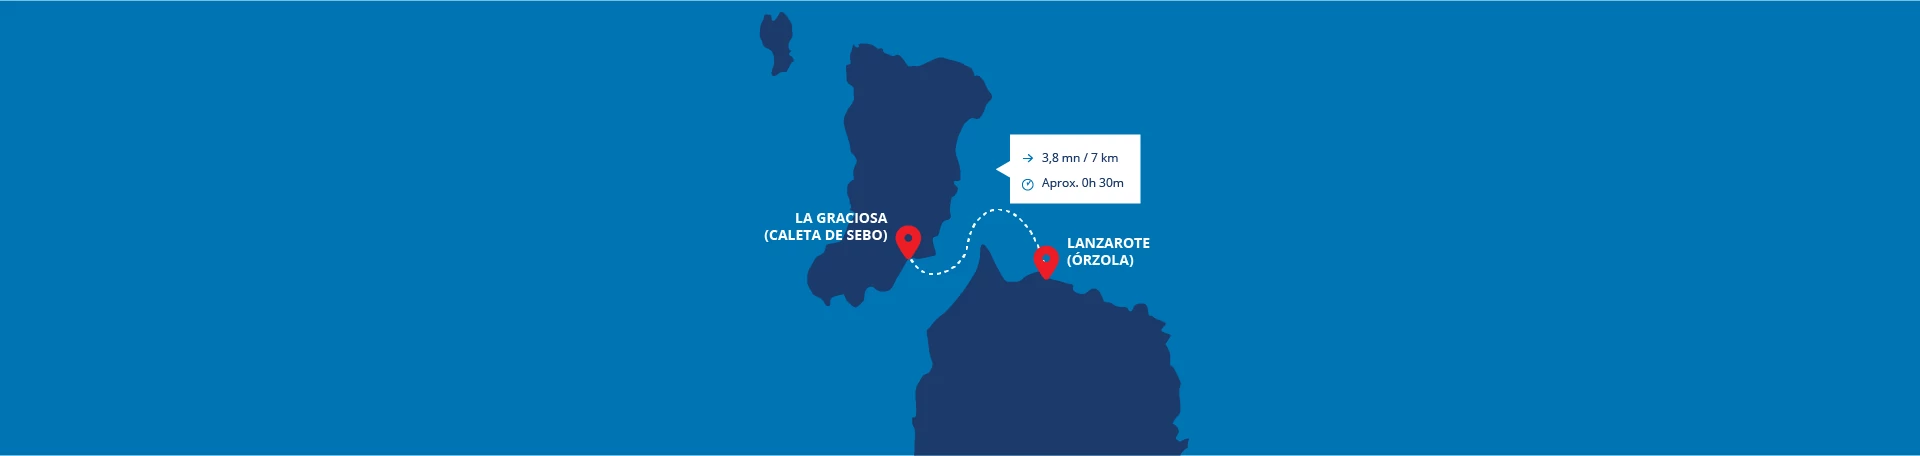 Carte de route des navires Lineas Romero entre Lanzarote et La Graciosa